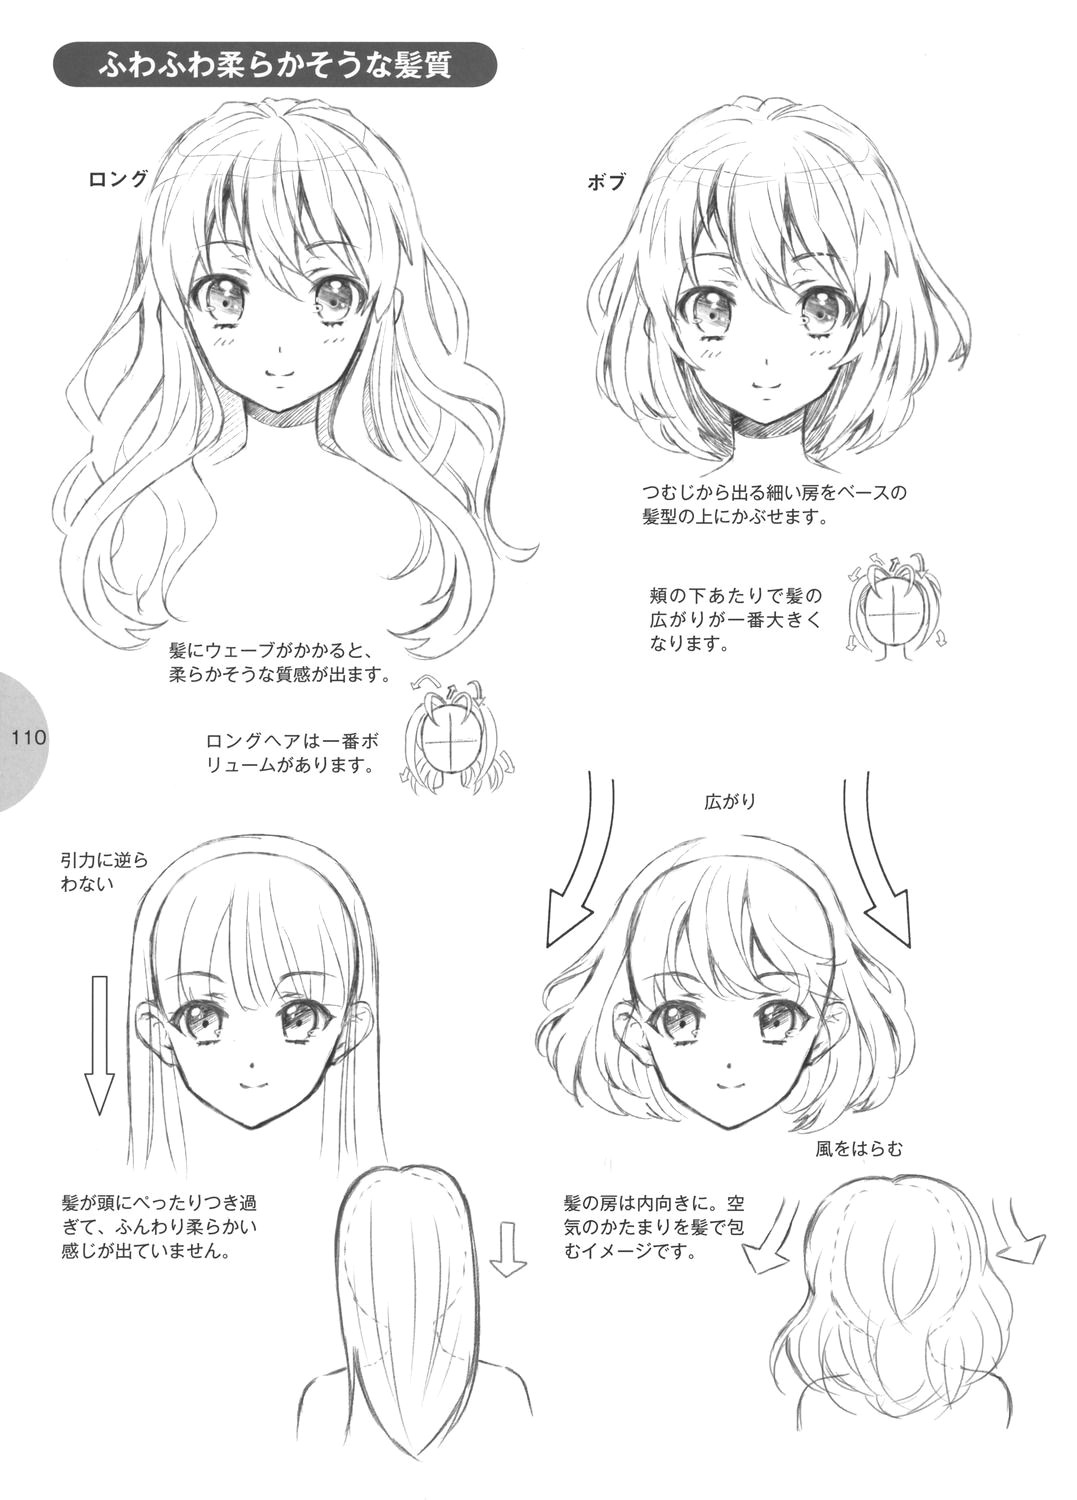 Drawing Anime Mouths Tutorial Hair Artsy Inpirations Pinterest Drawings Manga